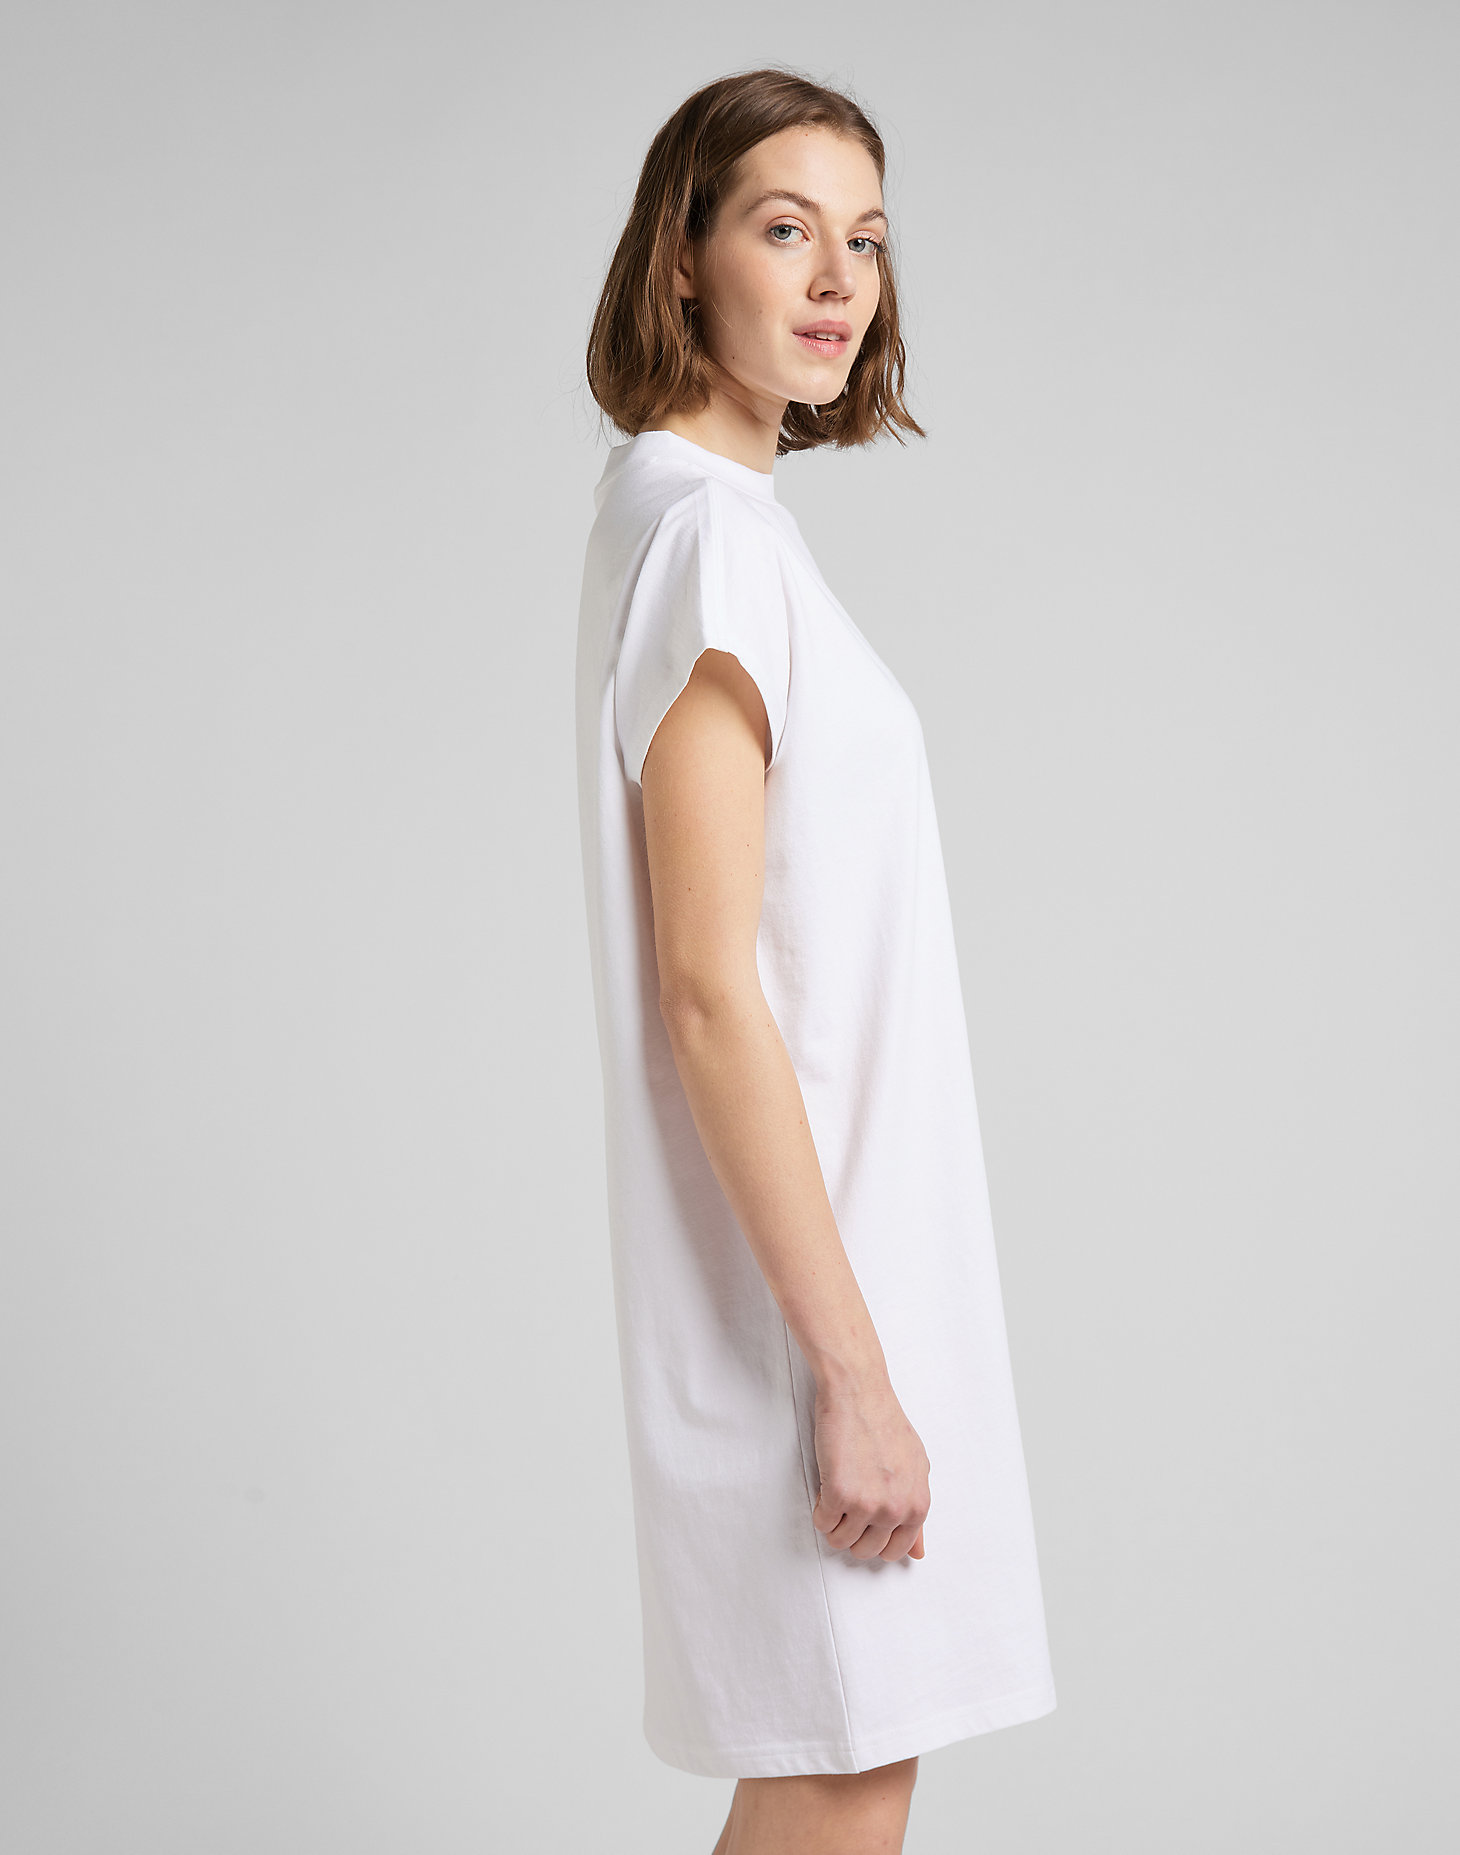 T-Shirt Dress in Bright White alternative view 3